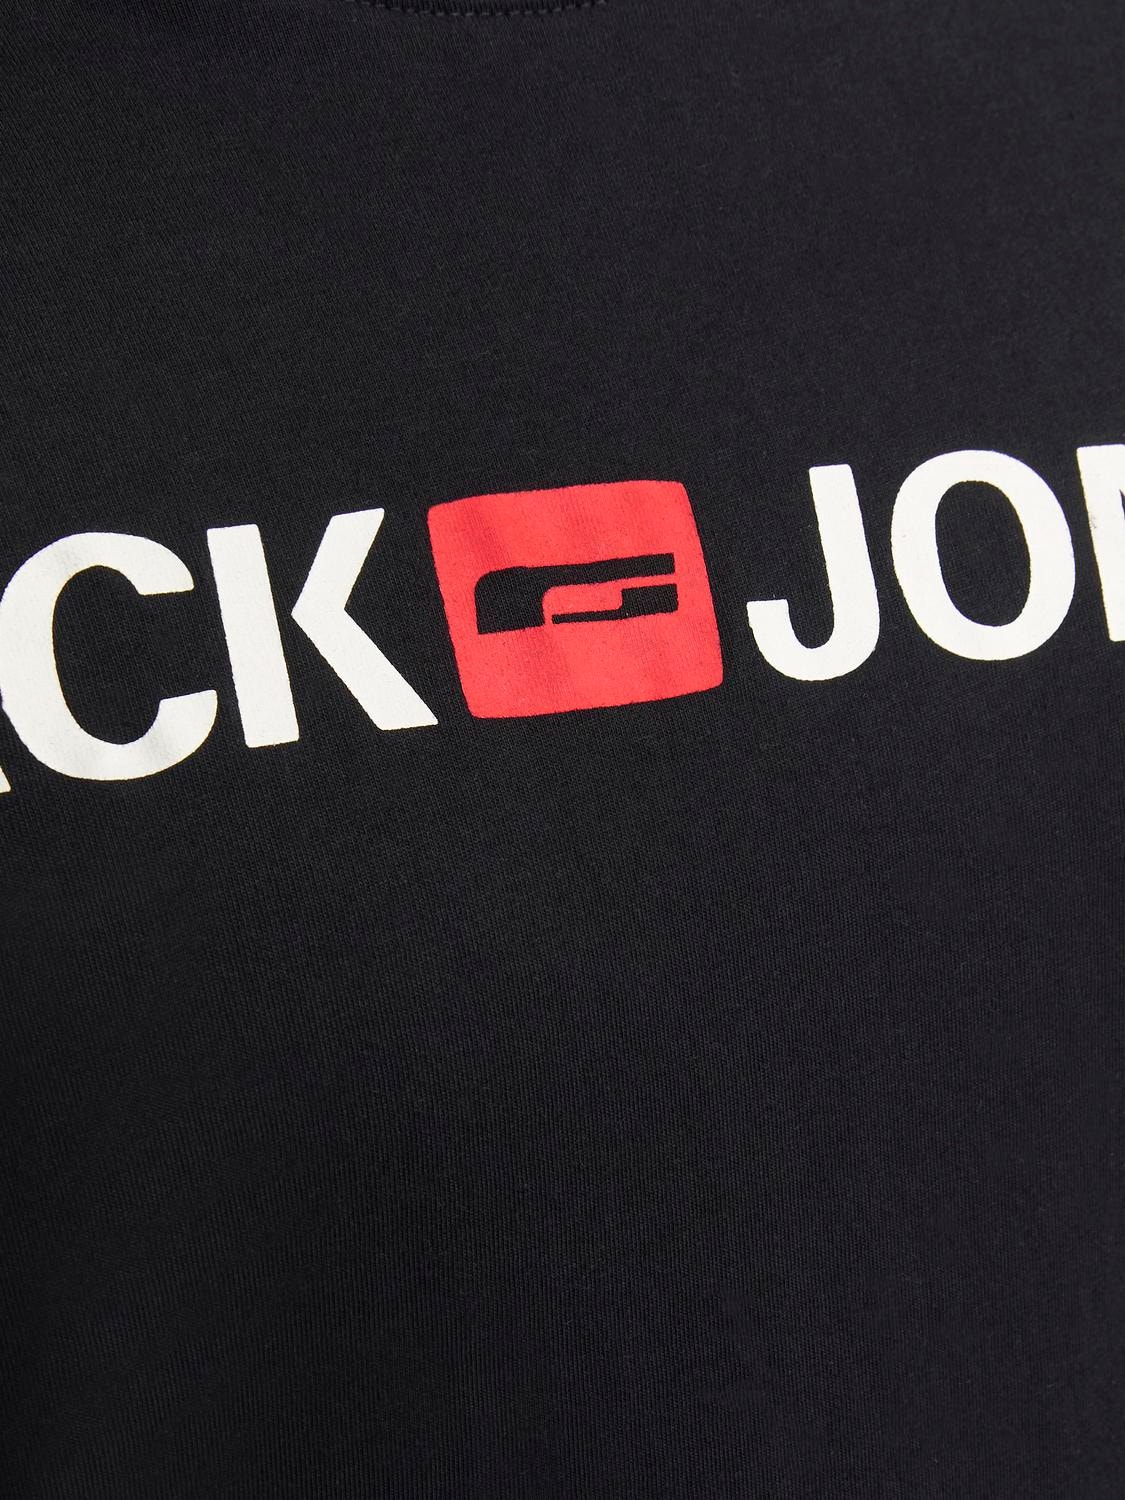 Jack & Jones Plus Size T-shirt Con logo -Black - 12184987